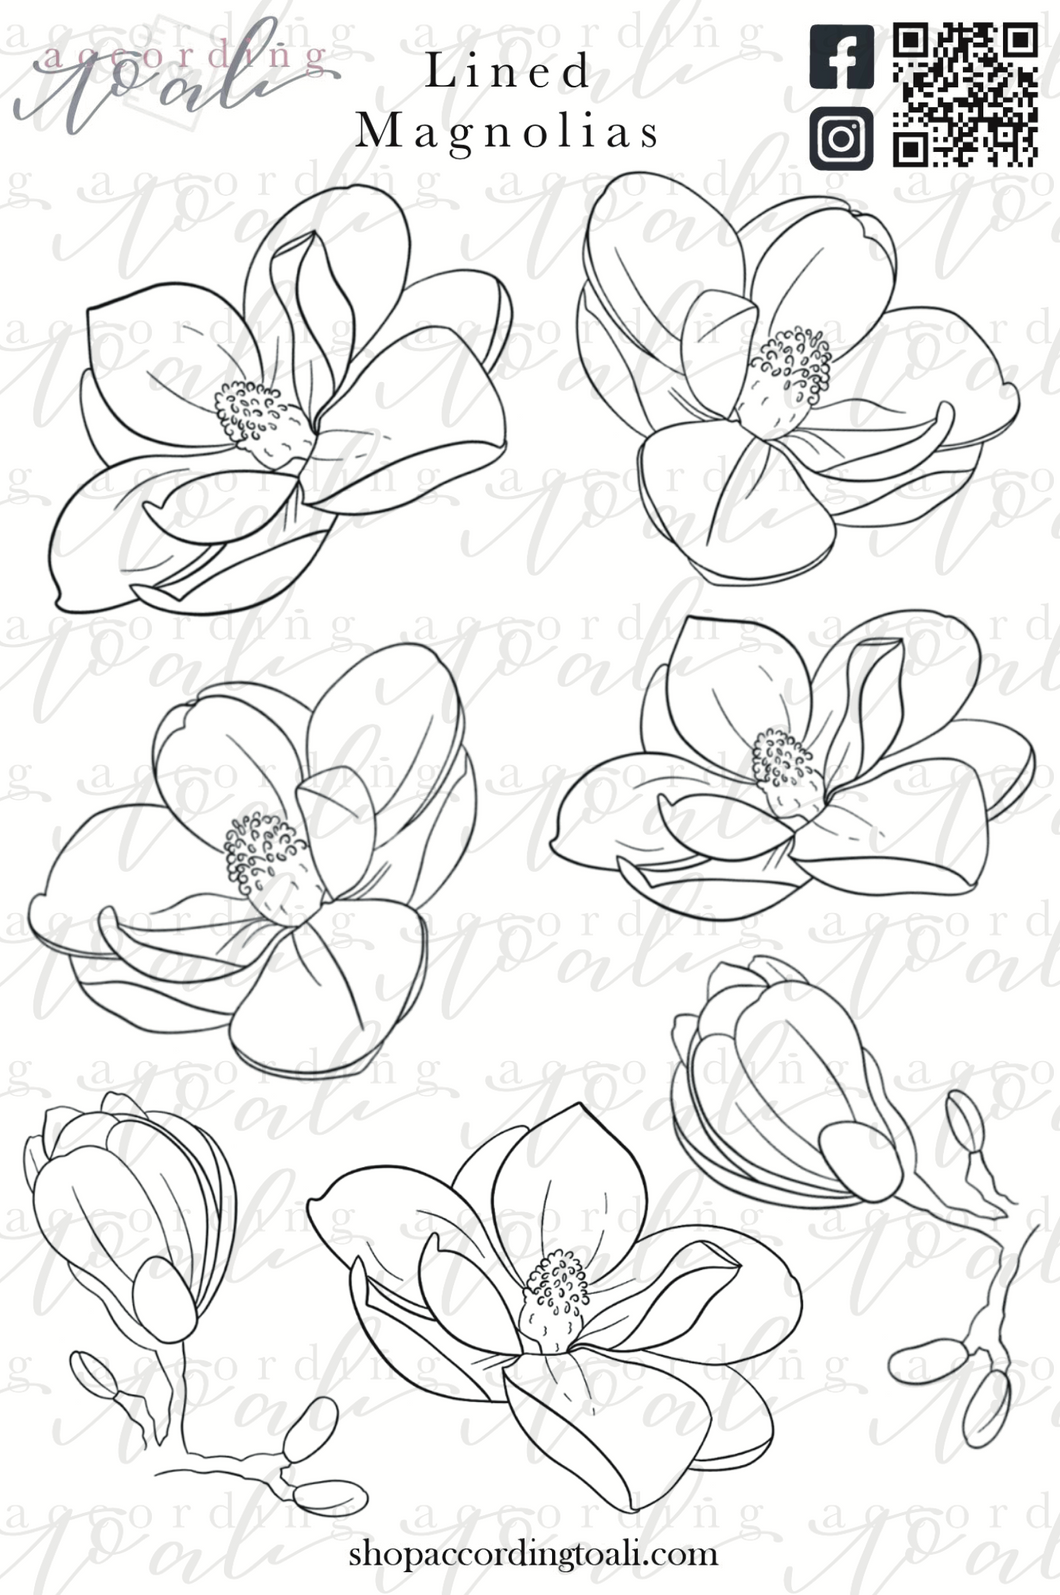 Lined Magnolias Sticker Sheet